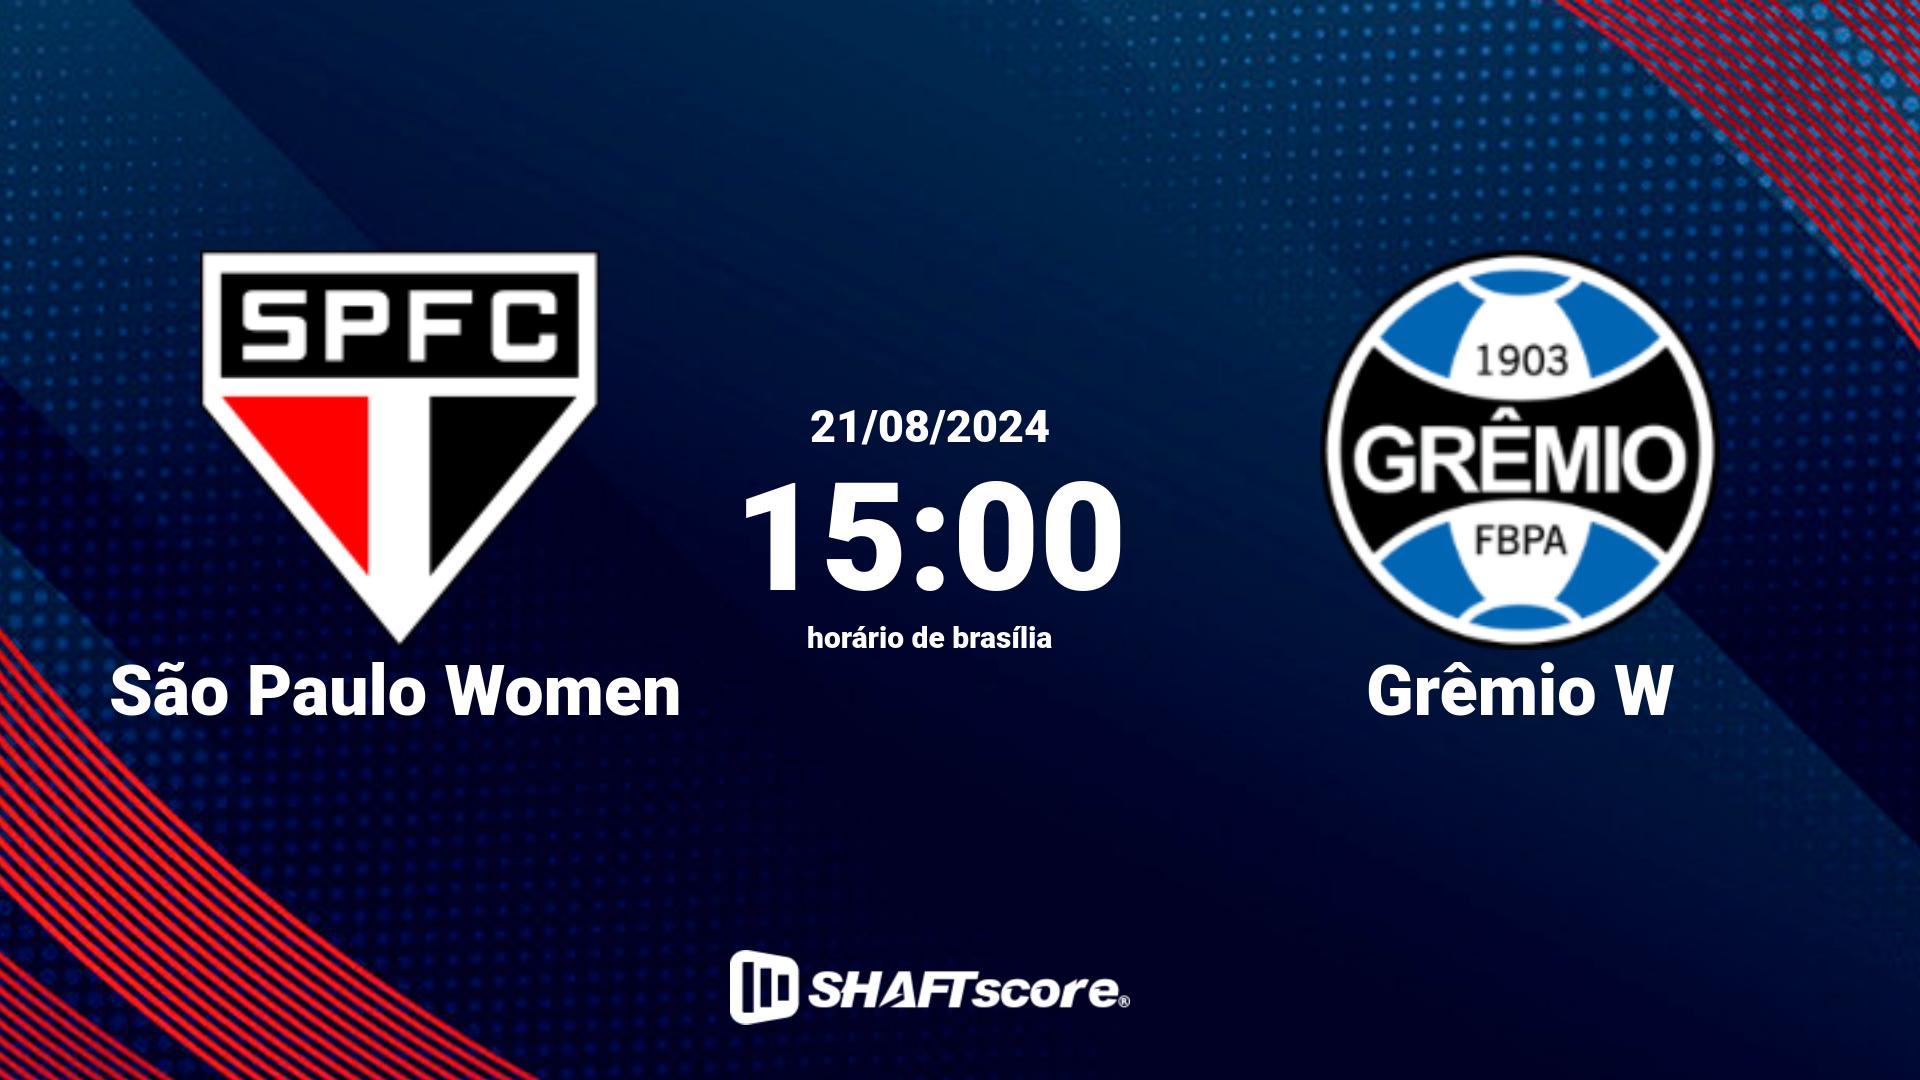 Estatísticas do jogo São Paulo Women vs Grêmio W 27.06 15:00